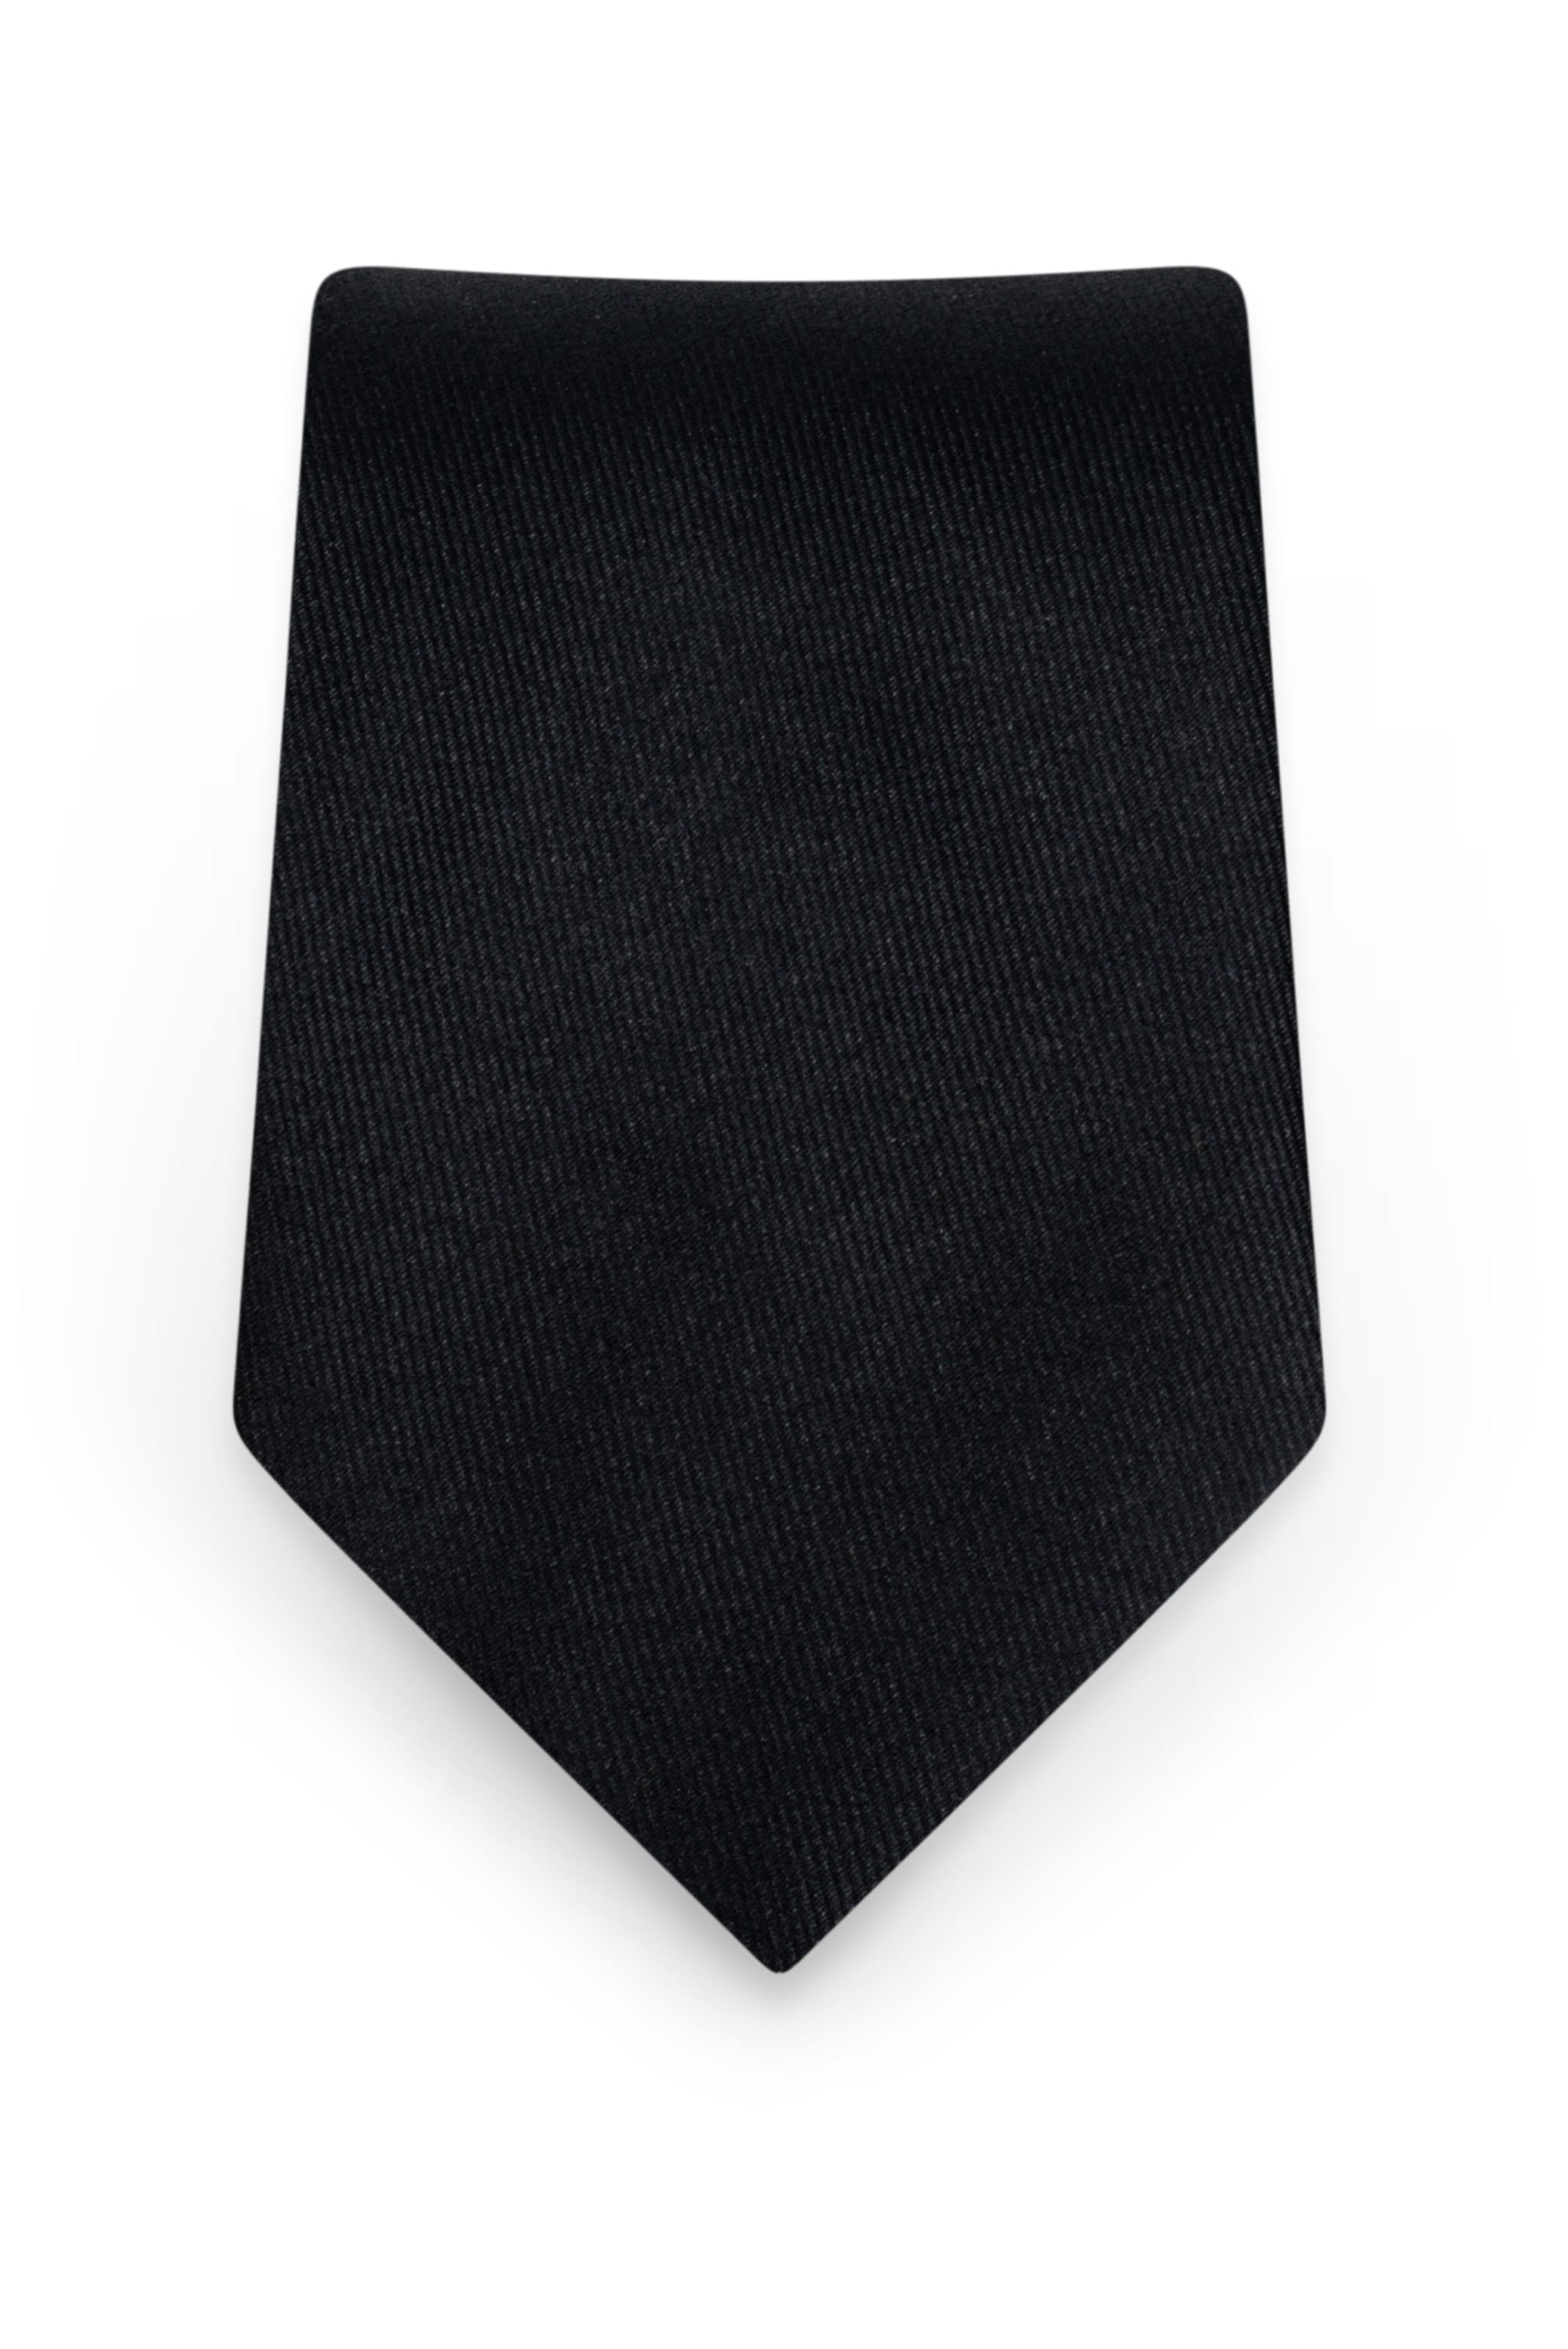 Solid Black Self-Tie Windsor Tie